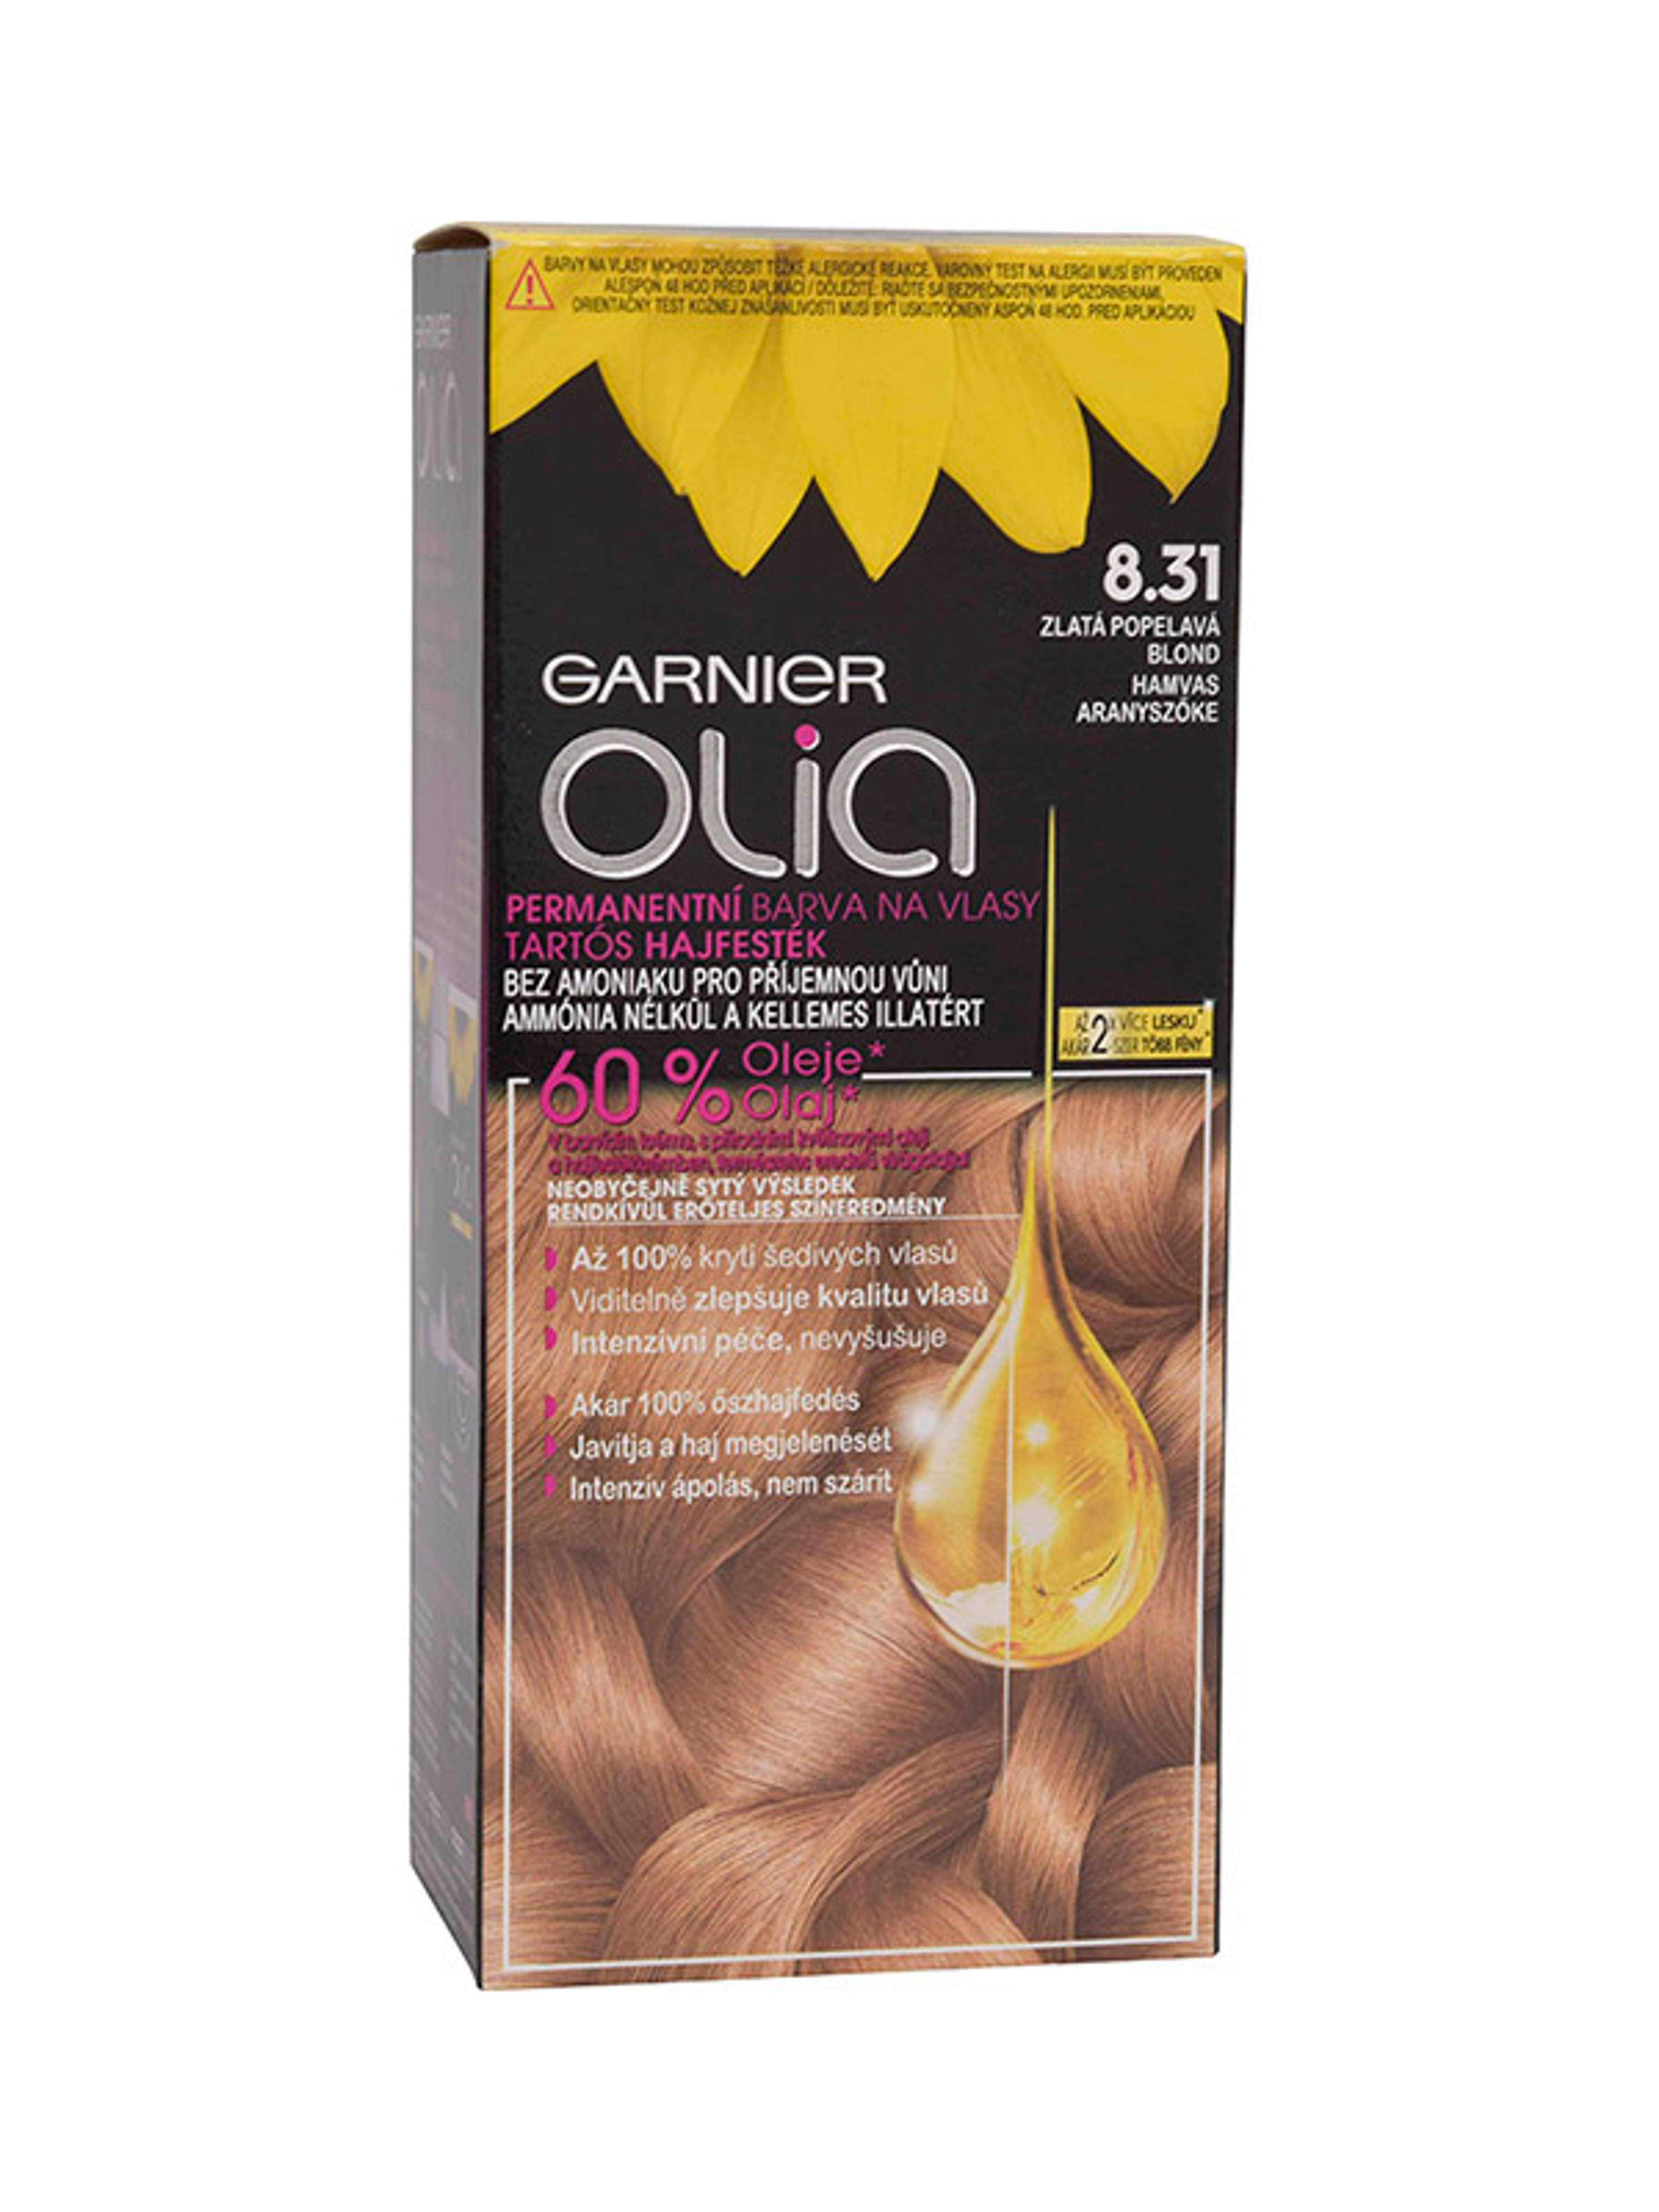 Garnier Olia tartós hajfesték 8.31 Hamvas aranyszőke - 1 db-1